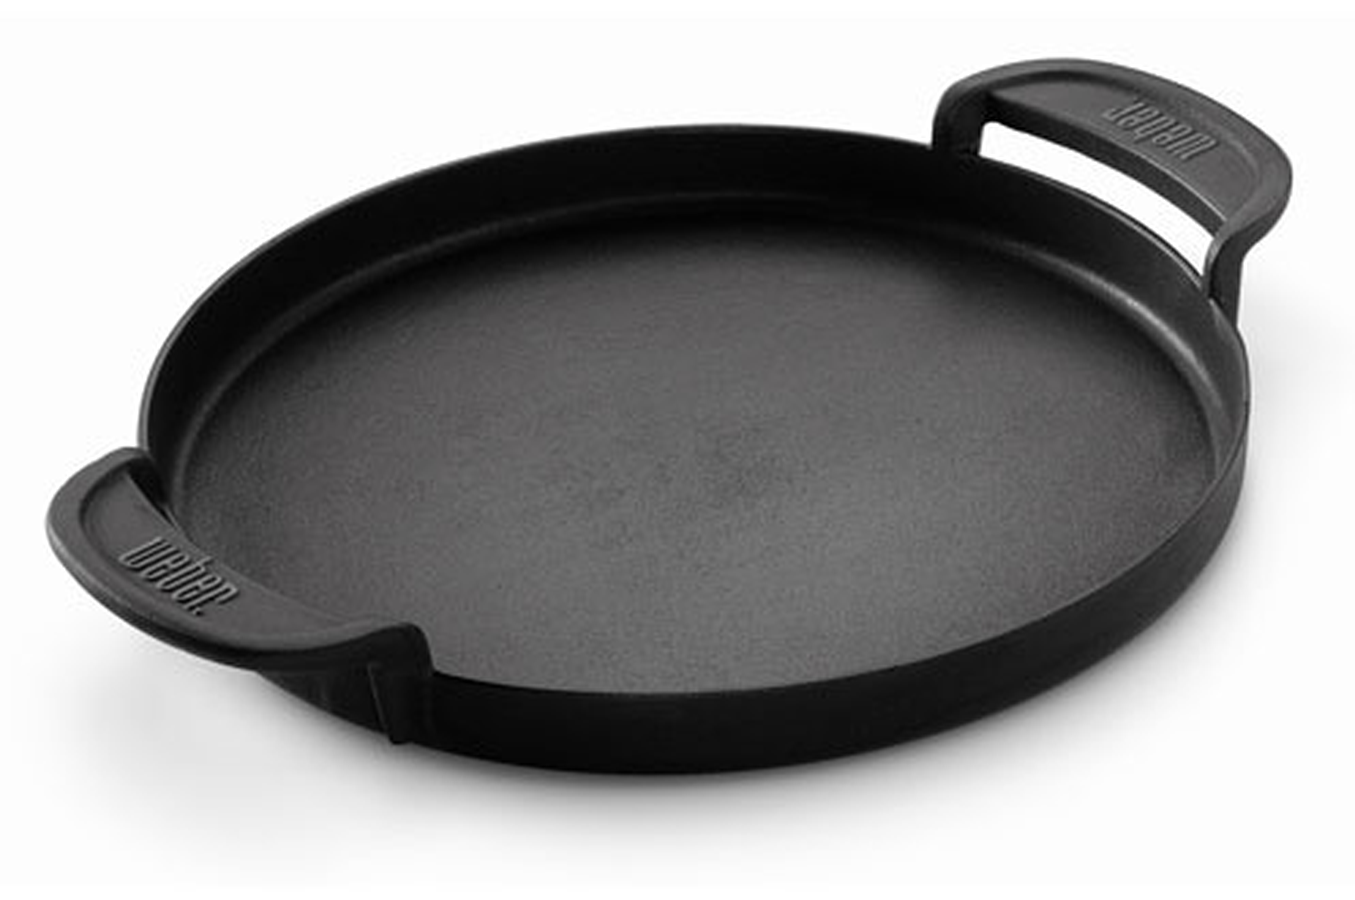 Plancha/wok pour barbecue Weber PLANCHA pour barbecue 57 cm (1284967